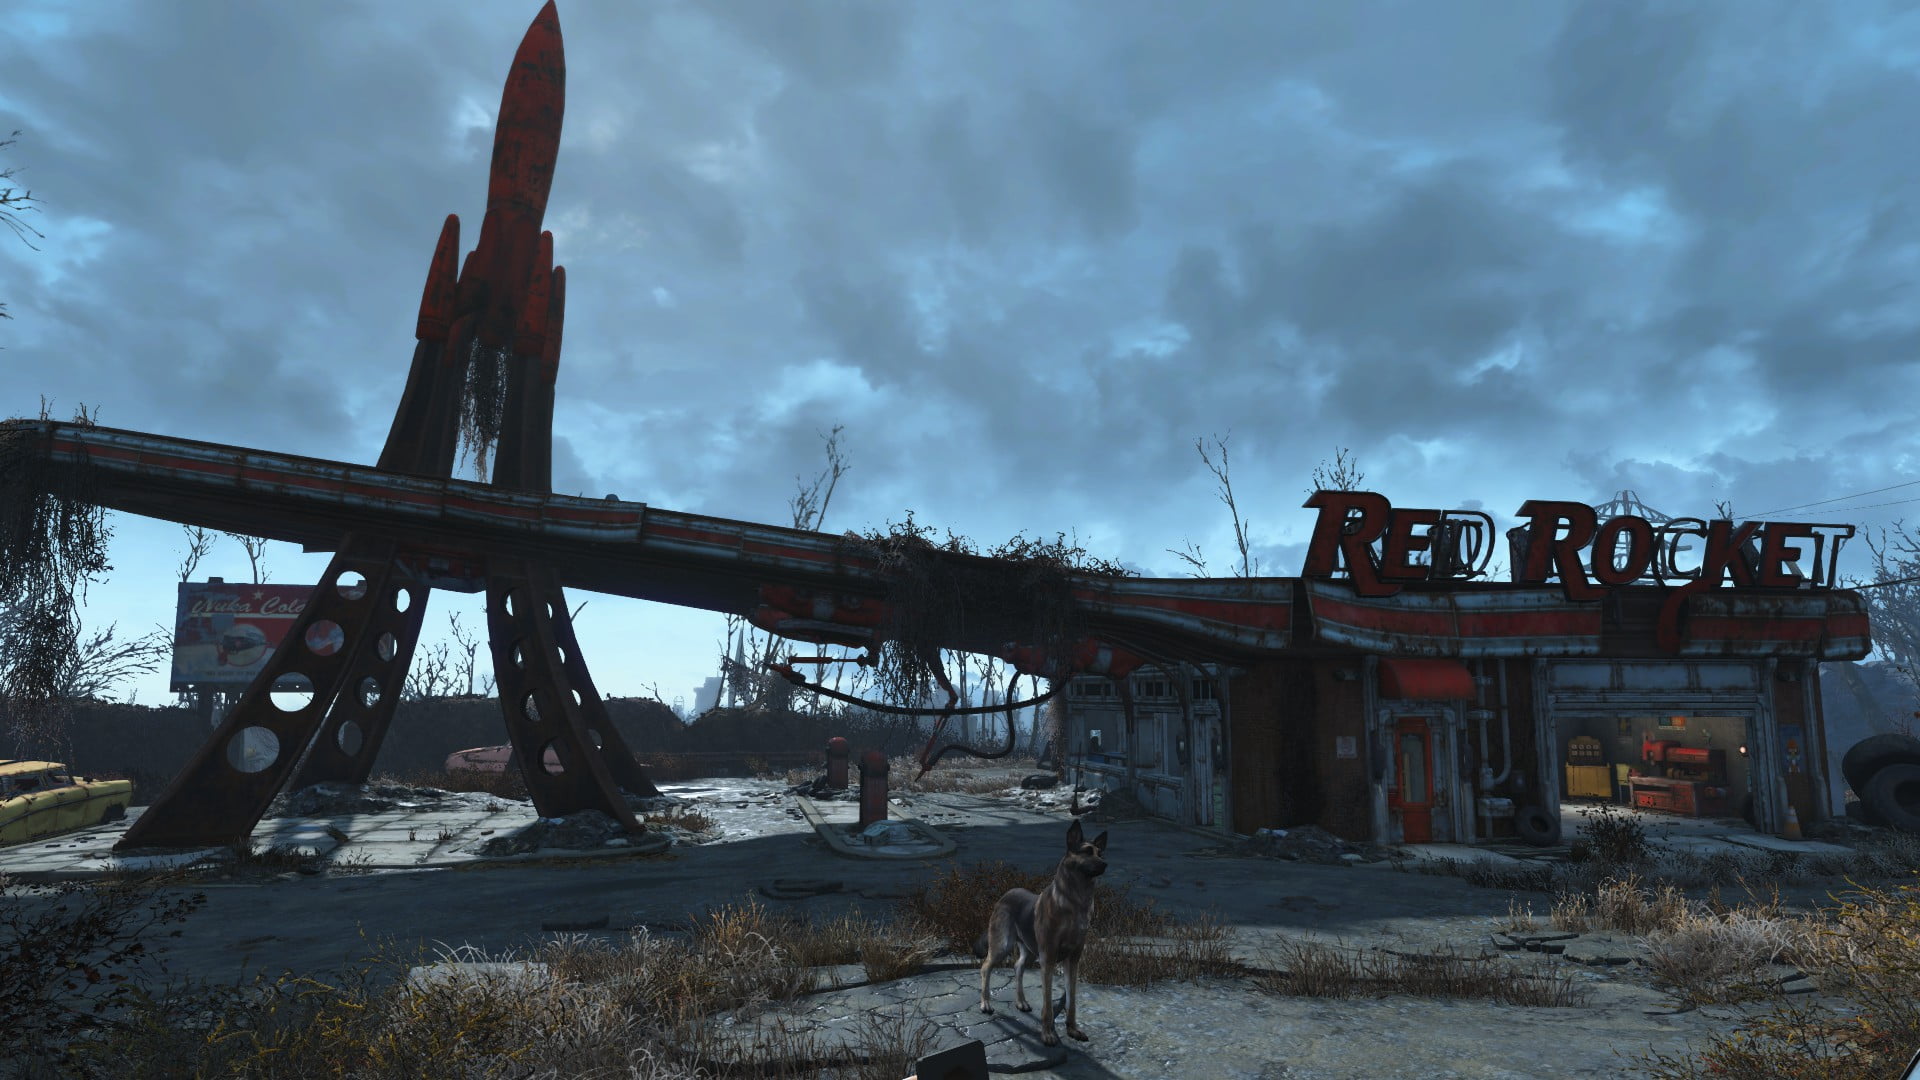 Rockin red rocket для fallout 4 (120) фото